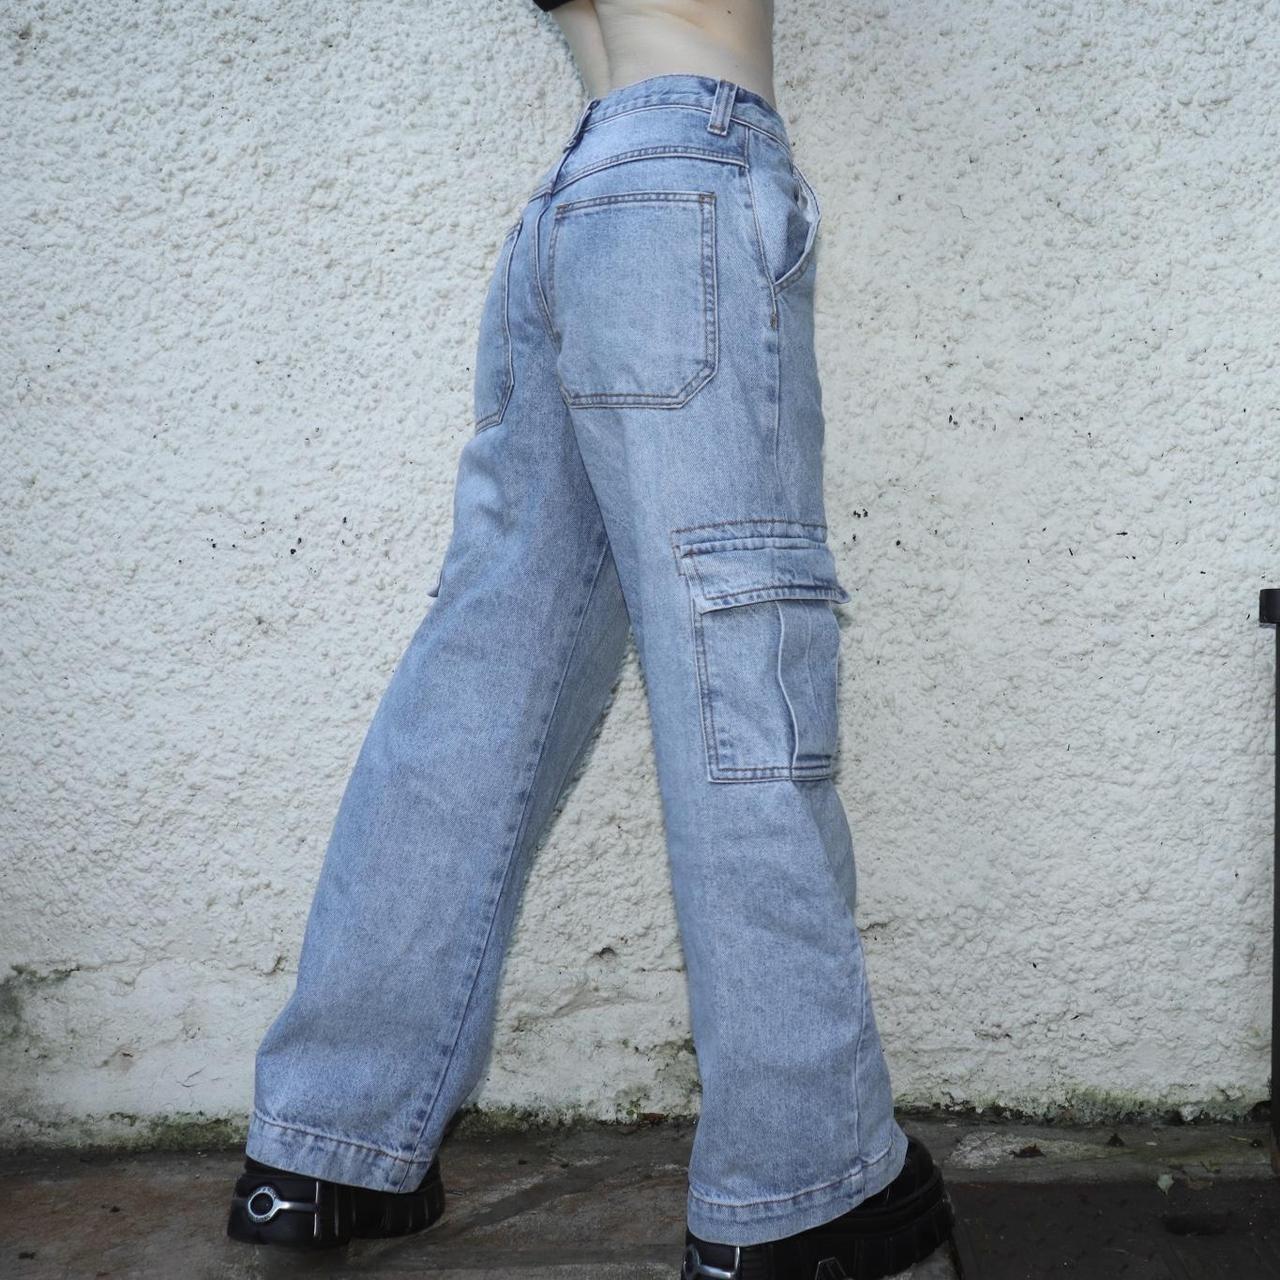 BRANDY MELVILLE jeans - Tatum jeans - can be low... - Depop